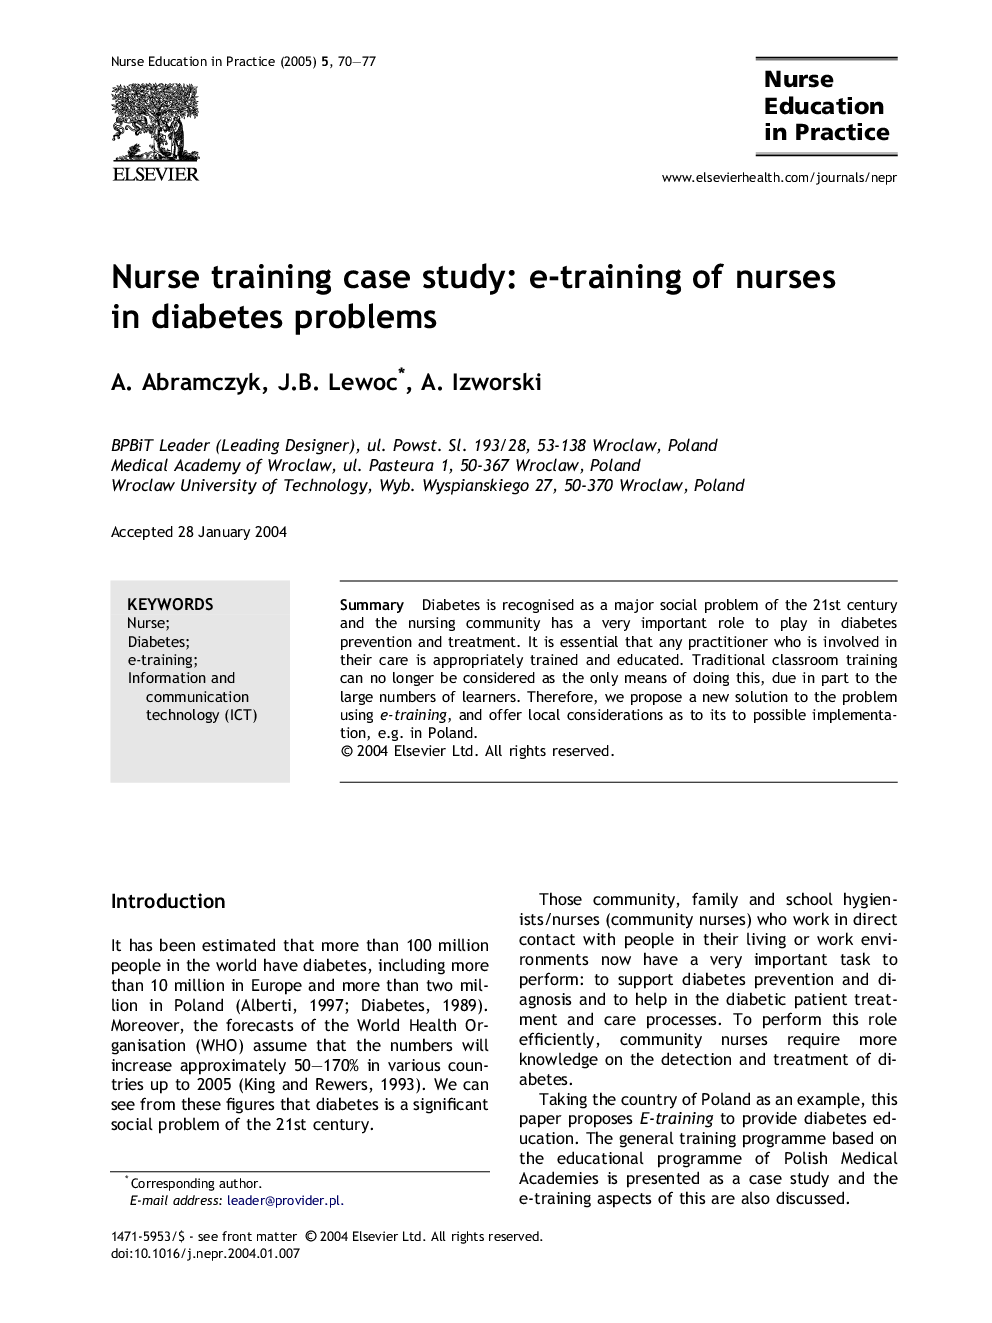 Nurse training case study: e-training of nurses in diabetes problems